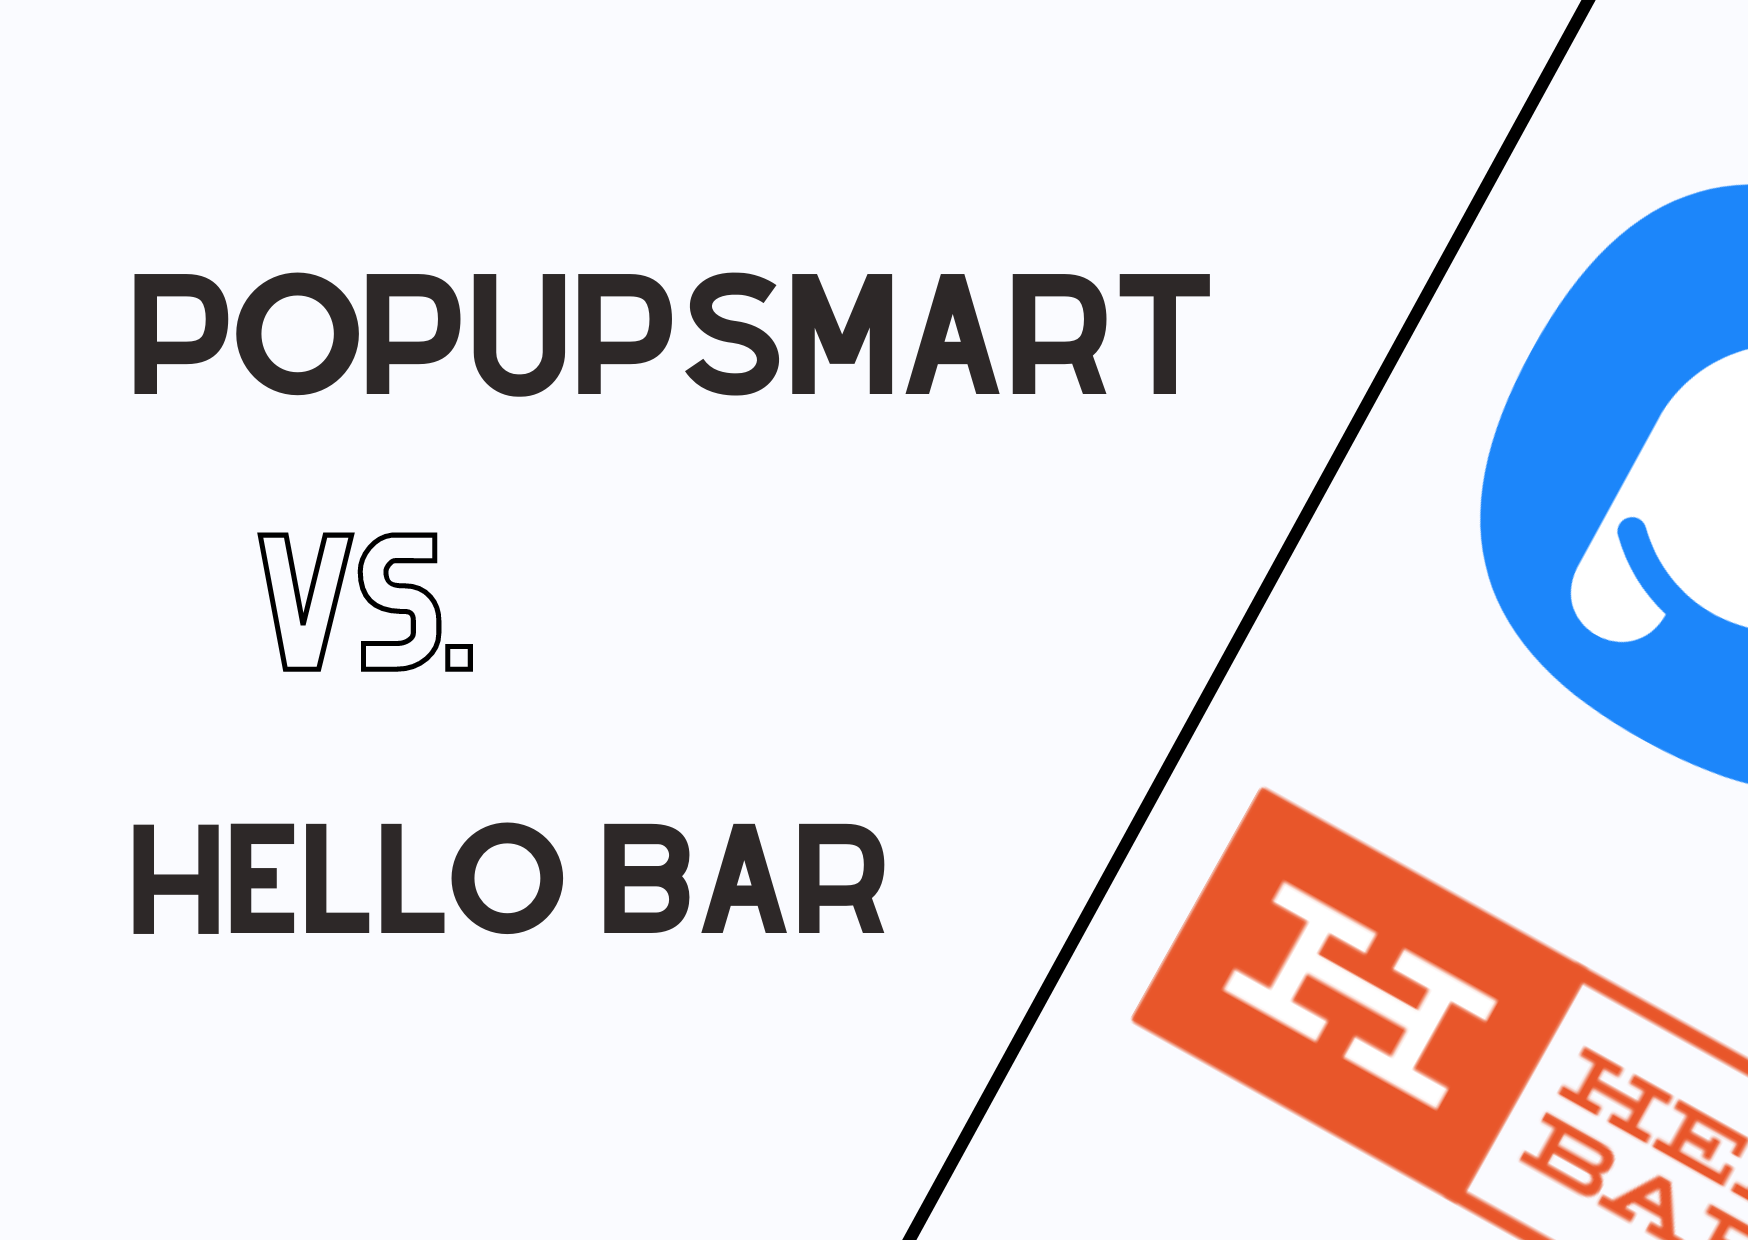 the comparison of Popupsmart and Hello Bar title